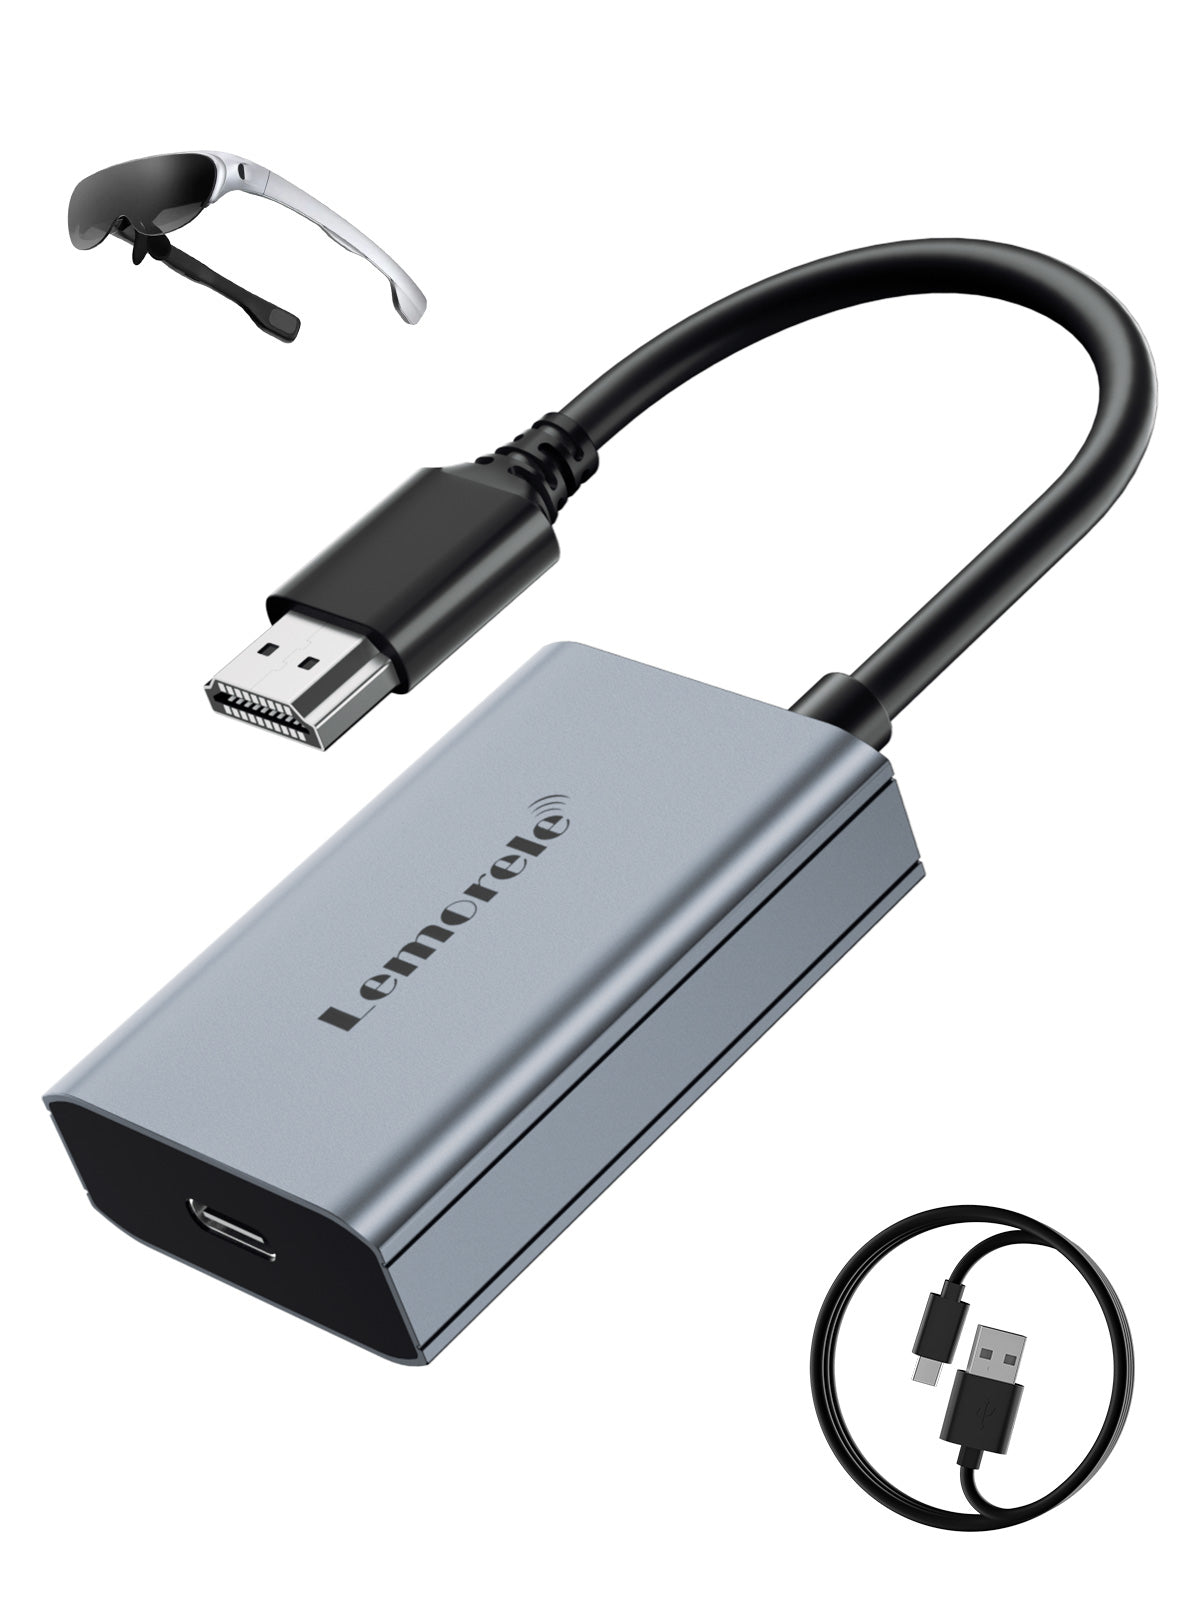 Lemorele  HDMI TO USB C adapter